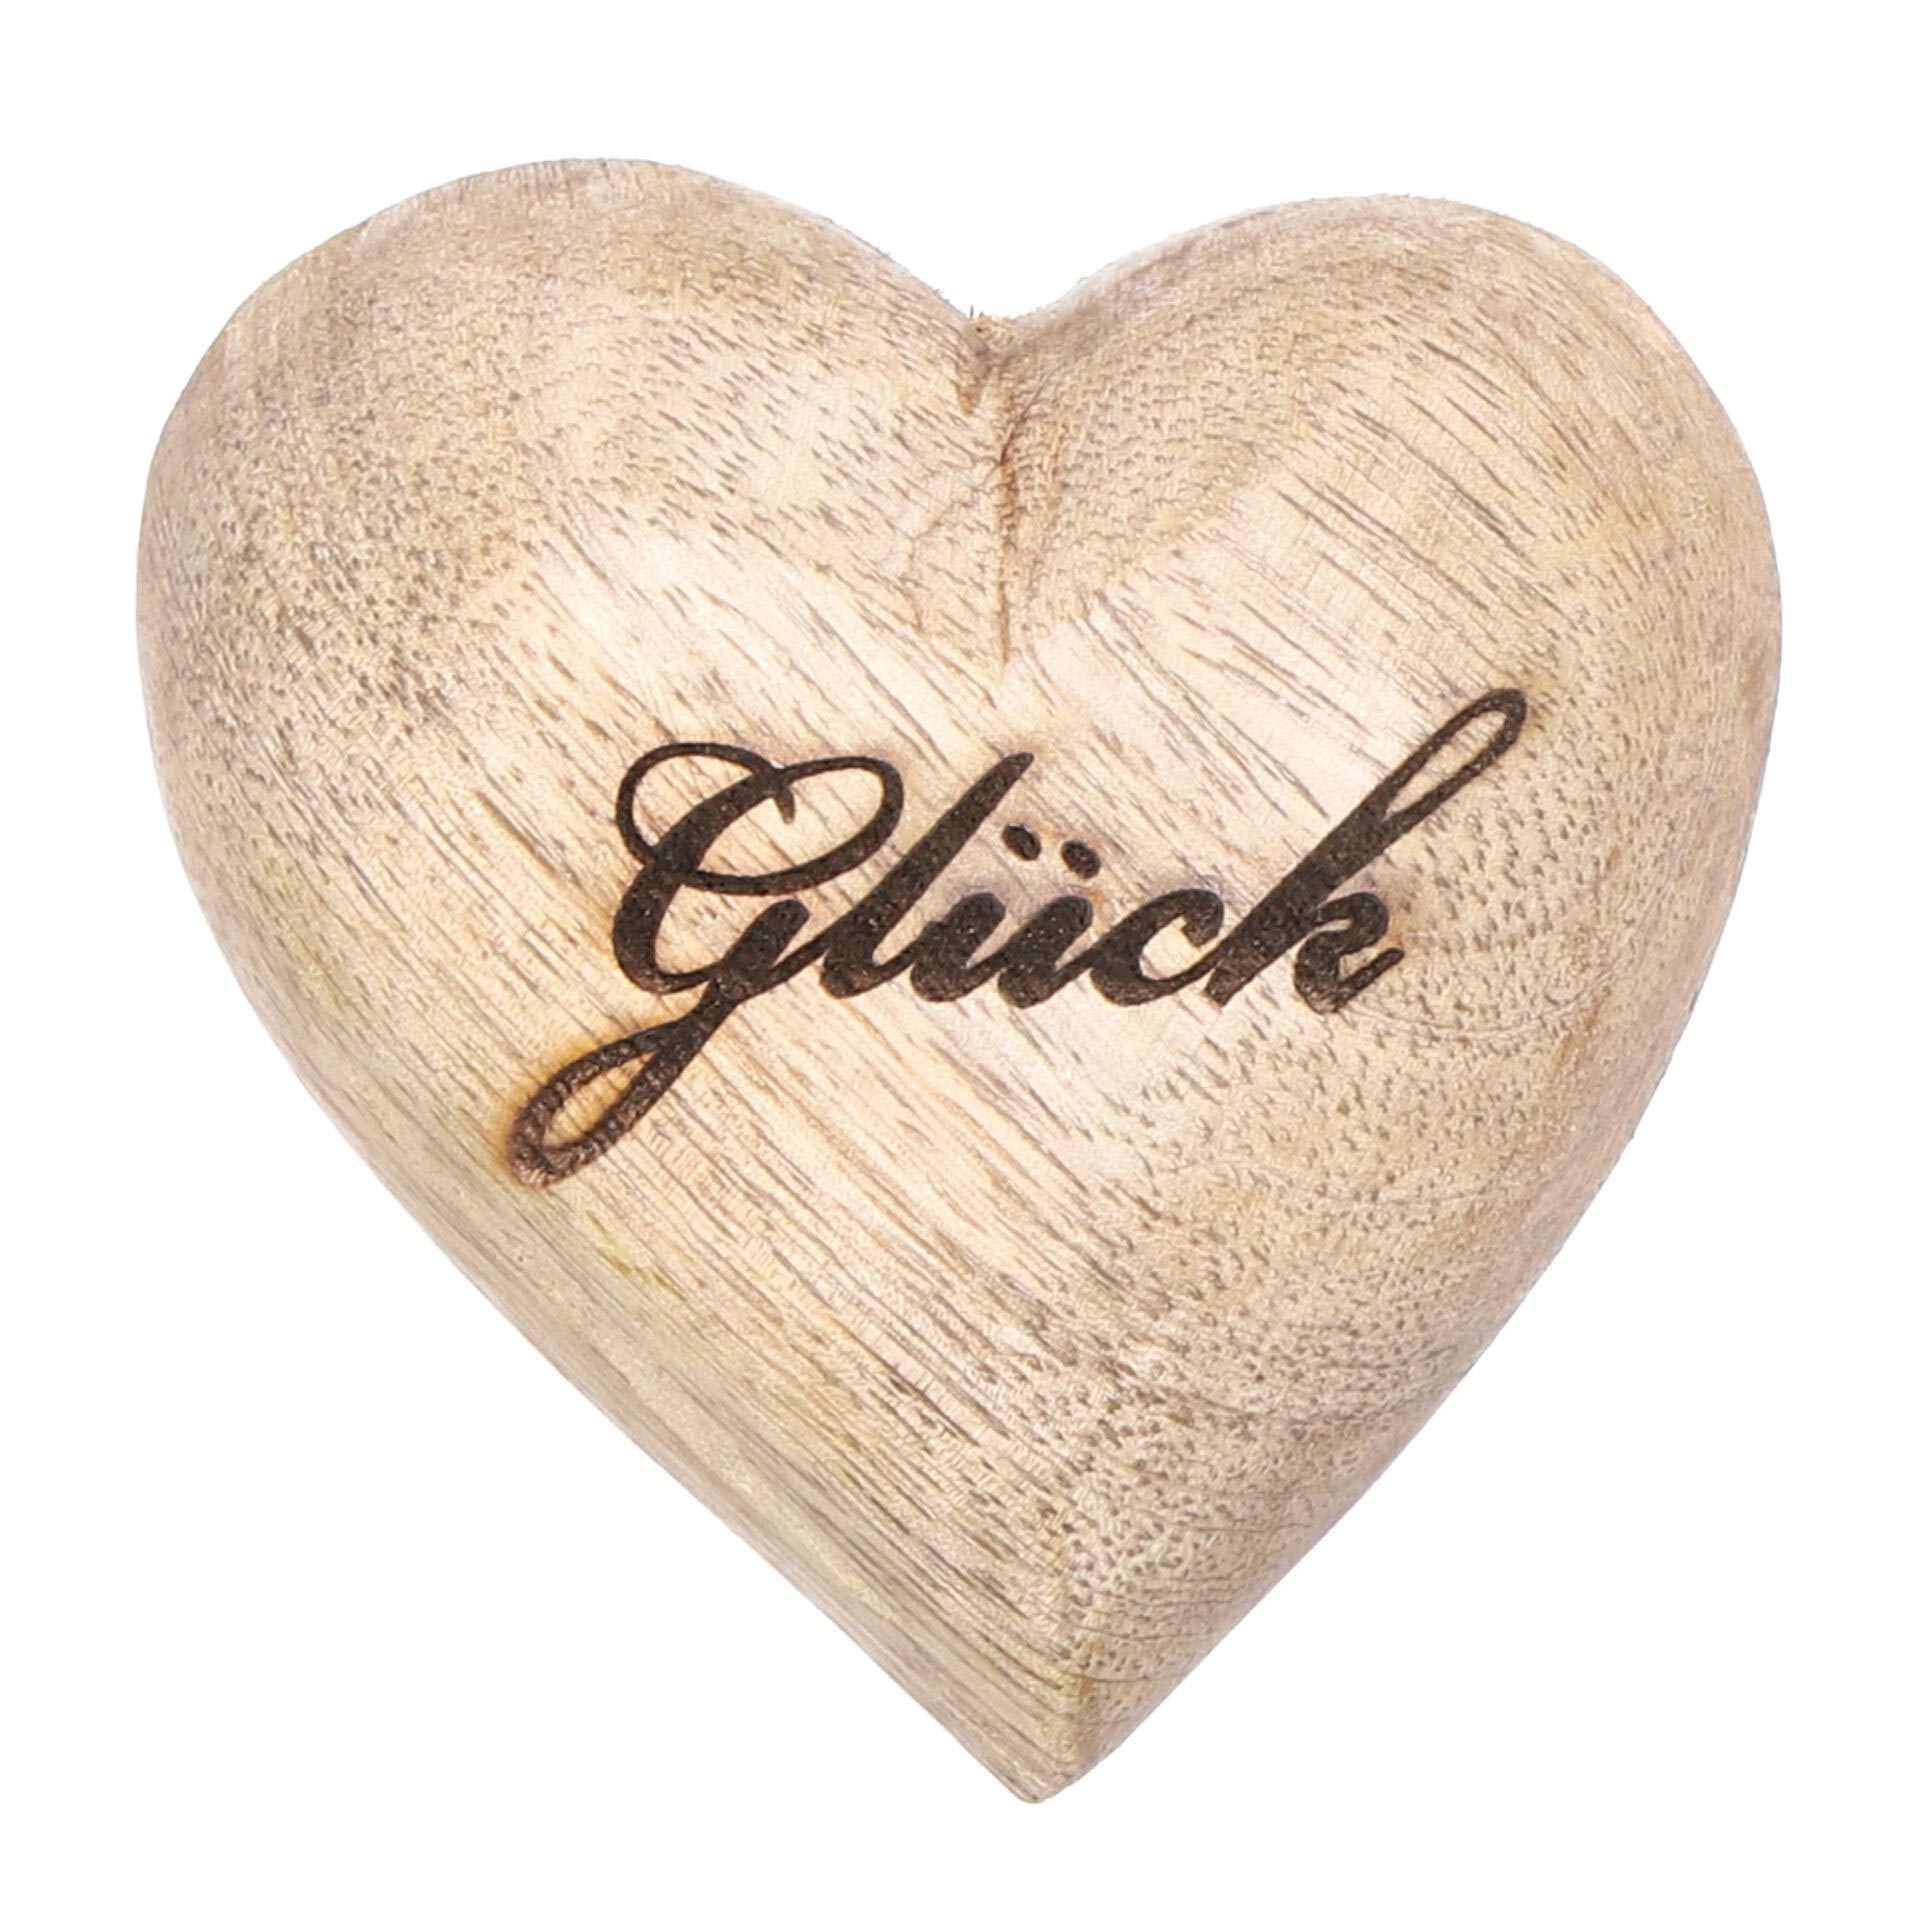 Gehlmann Deko-Holz-Herz aus Mangoholz, 1-teilig, farblich sortiert